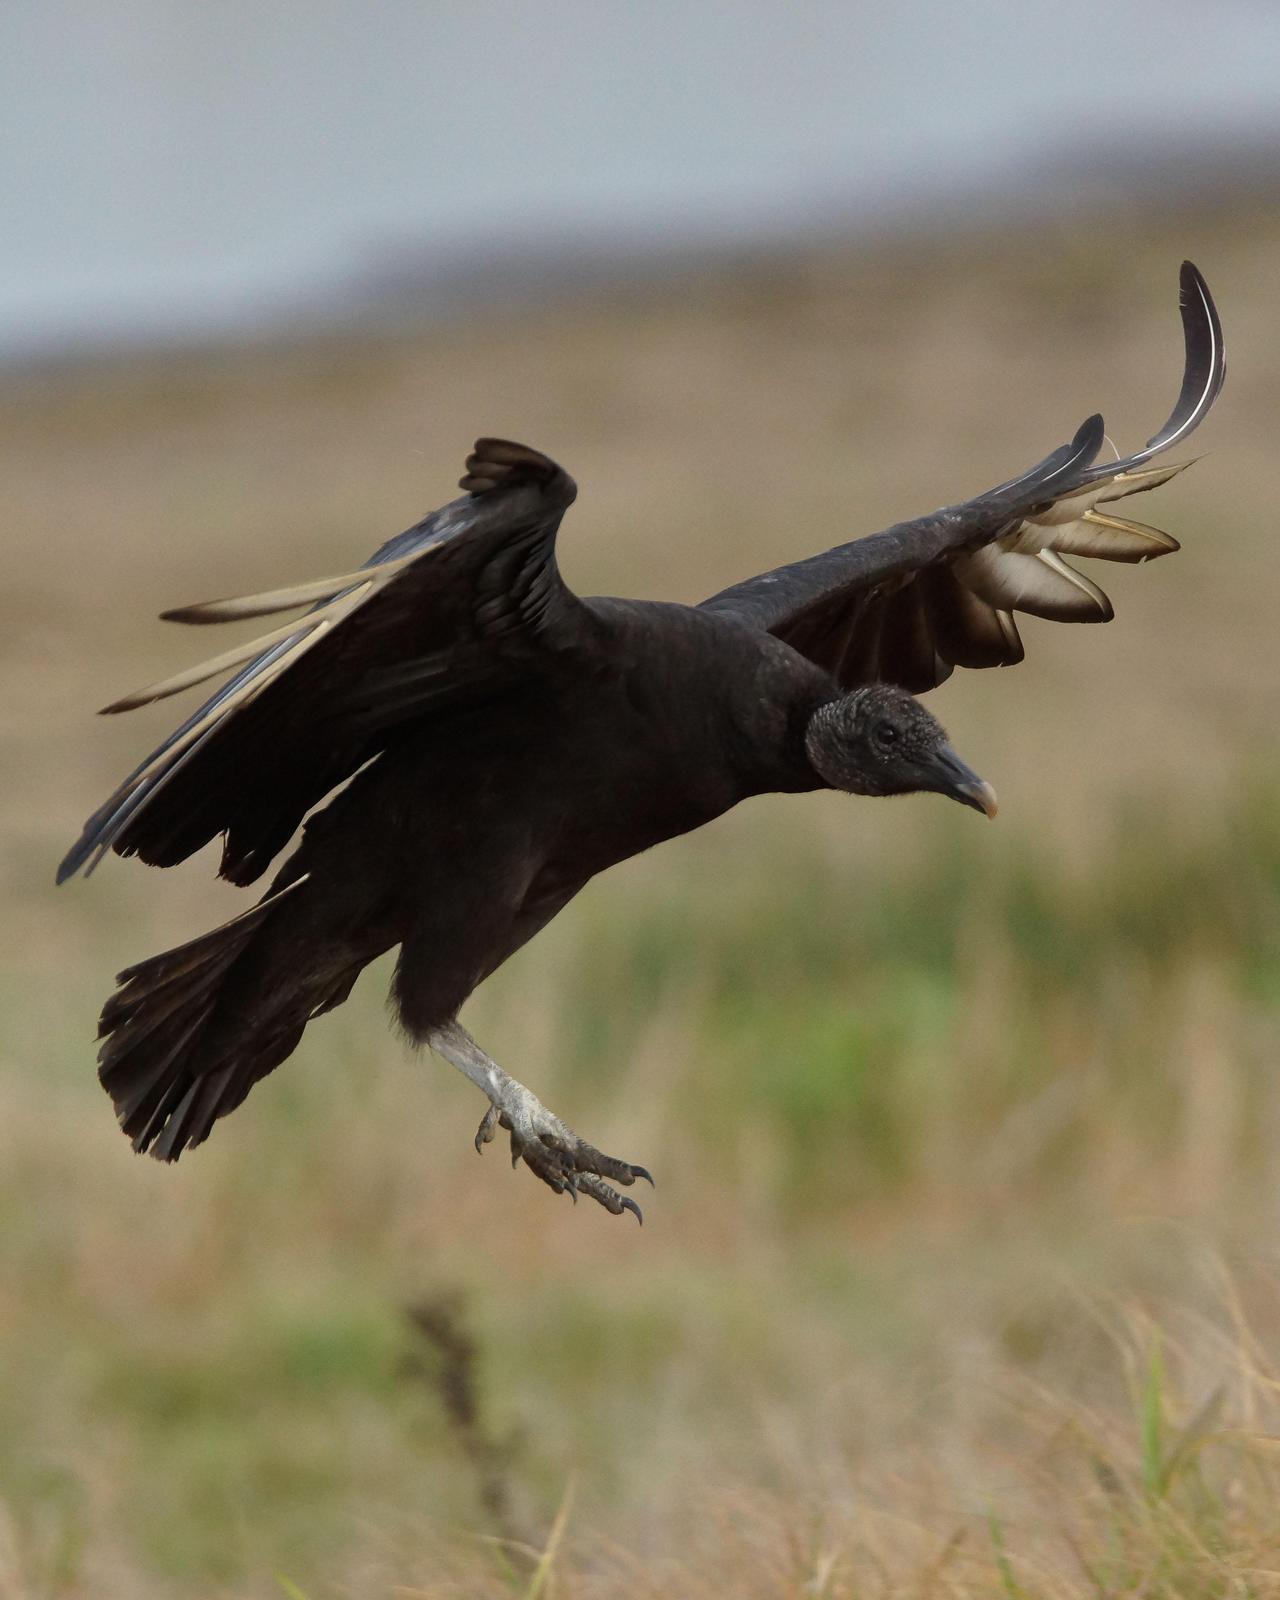 Black Vulture Photo by Steve Percival